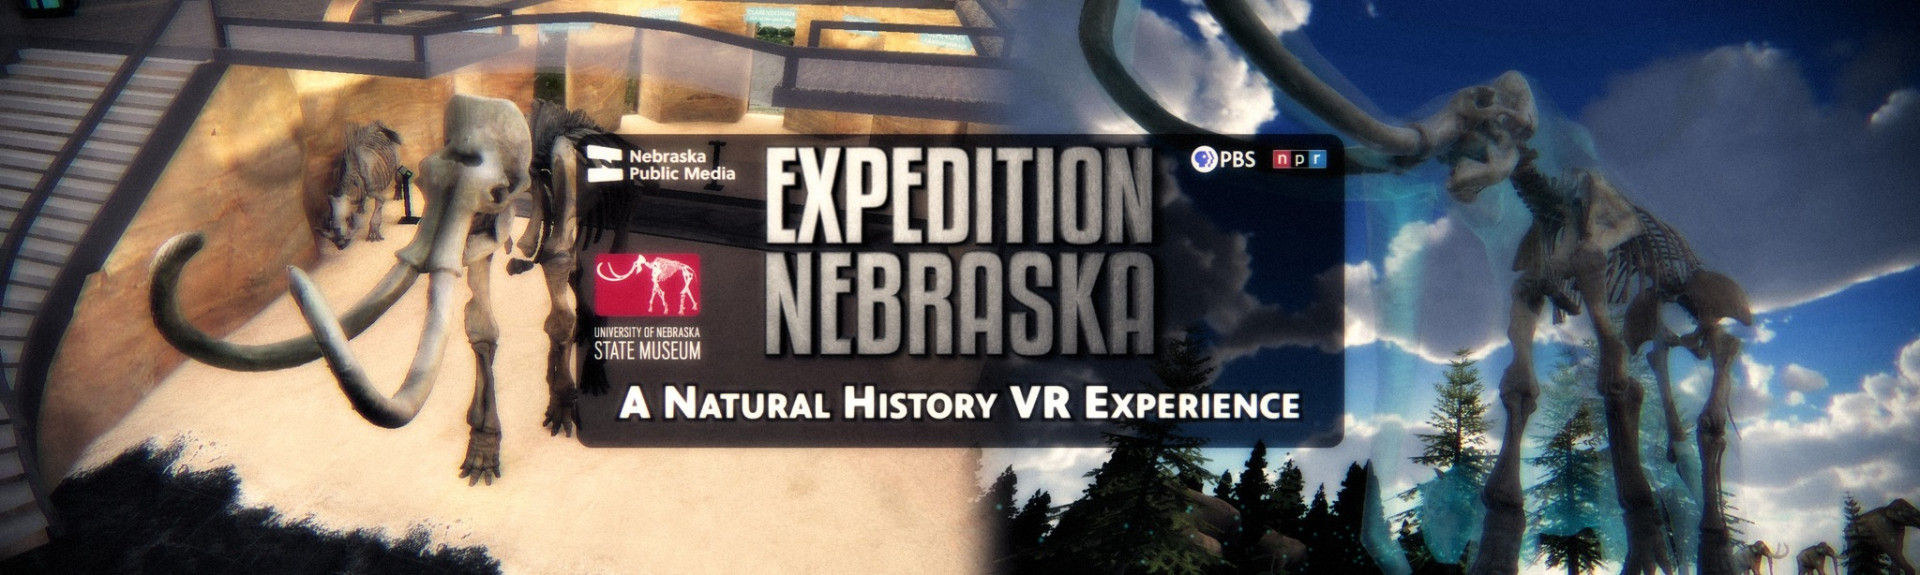 Expedition Nebraska: A Natural History VR Experience